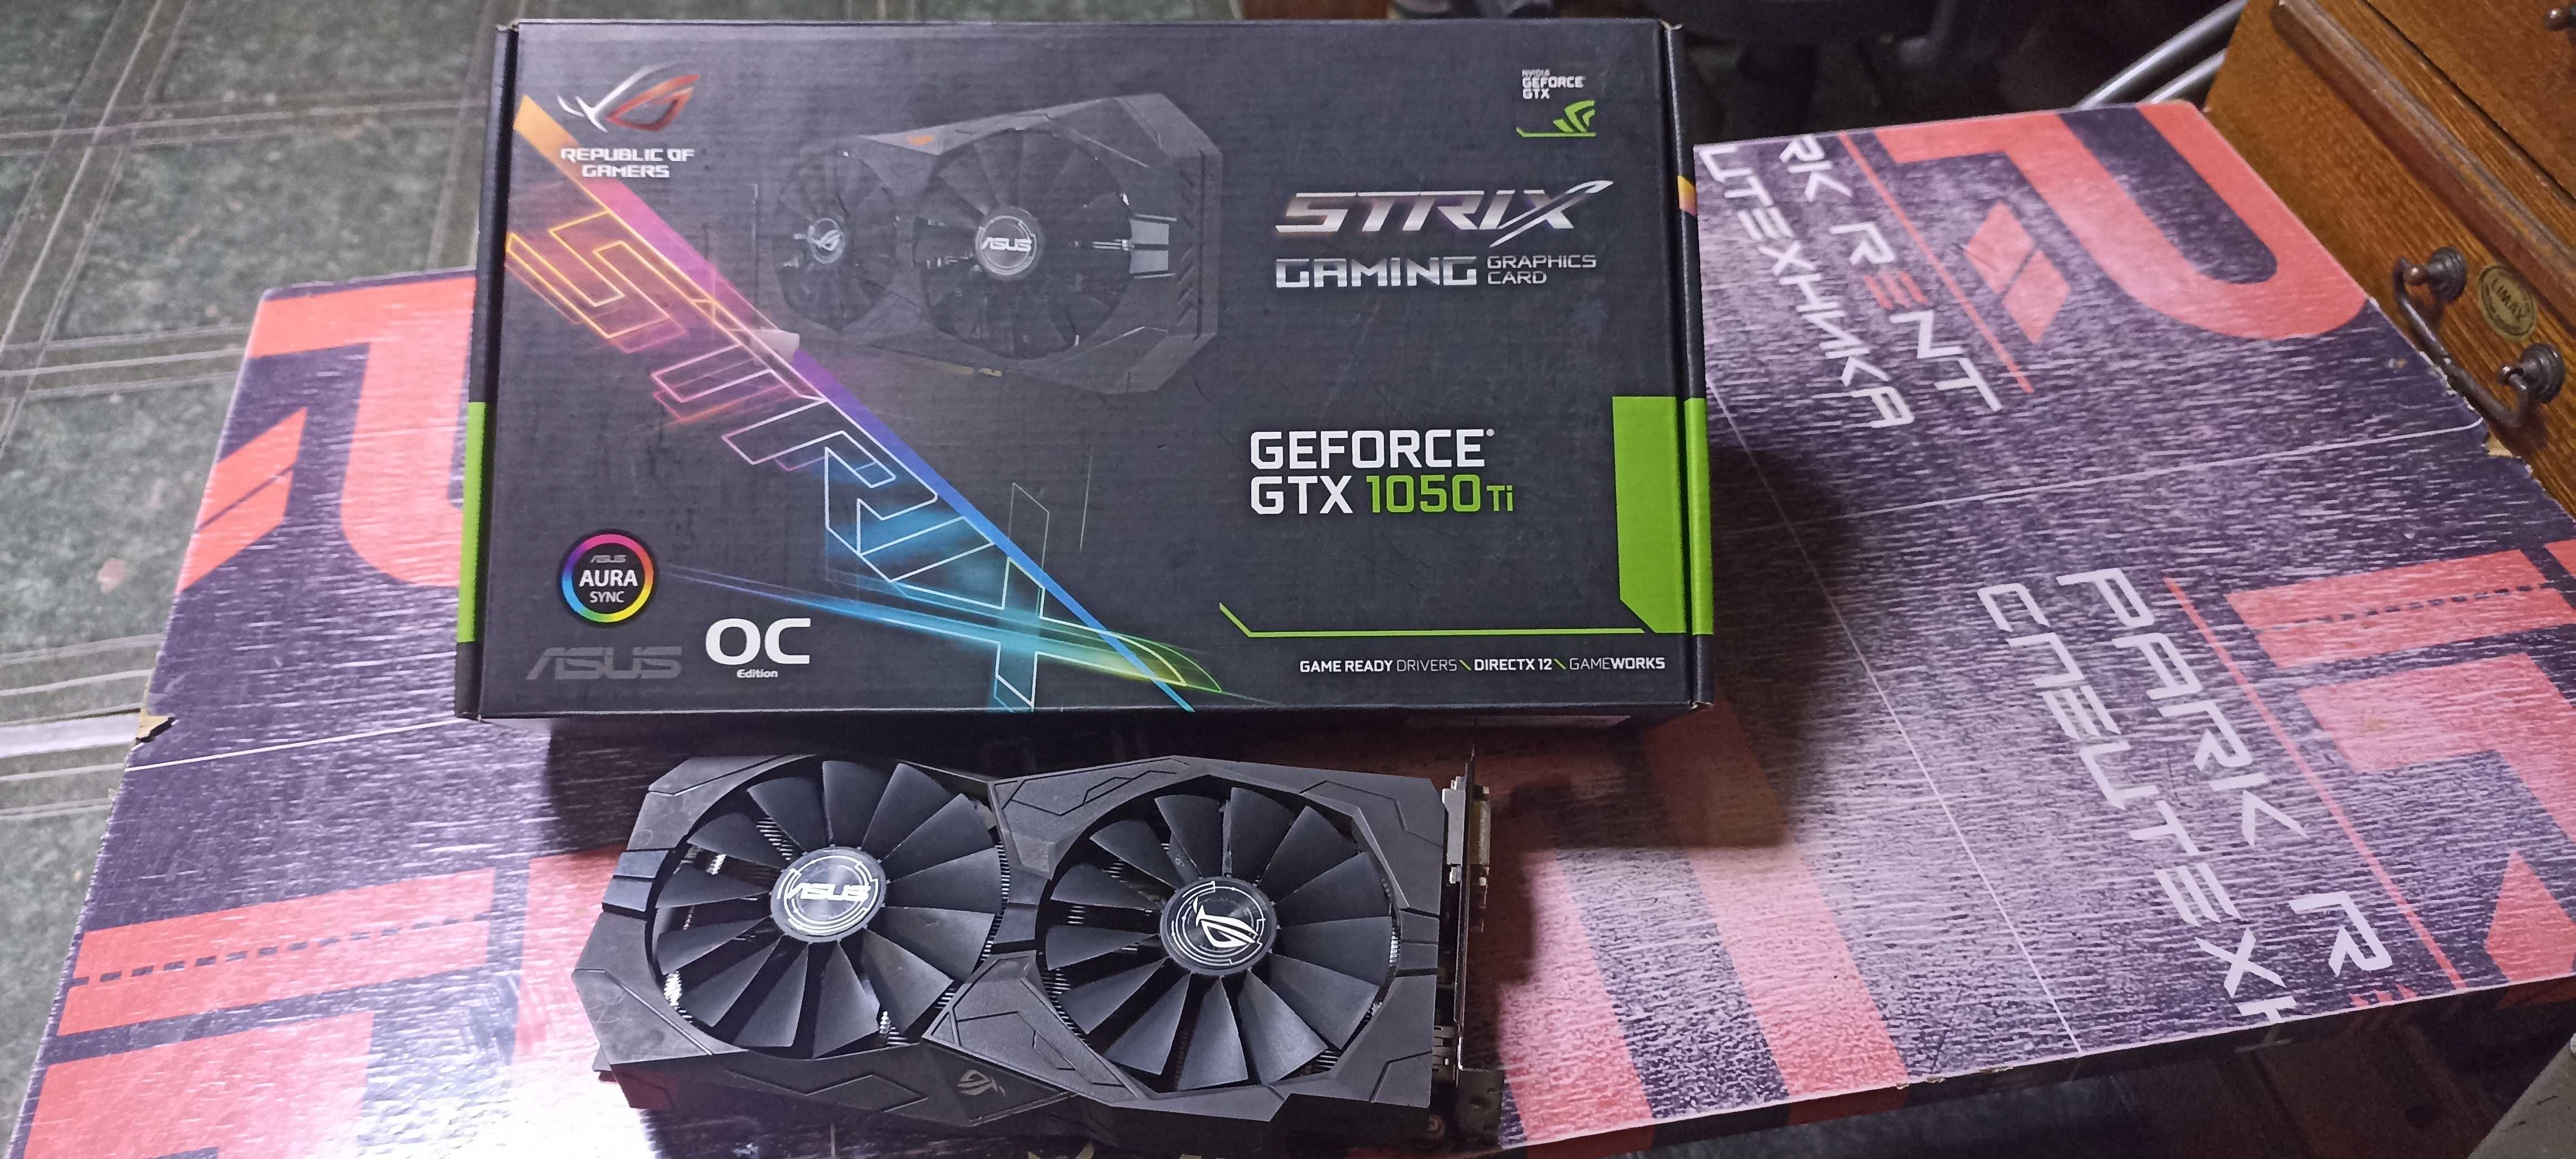 Nvidia Geforce GTX 1050Ti (strix gaming)